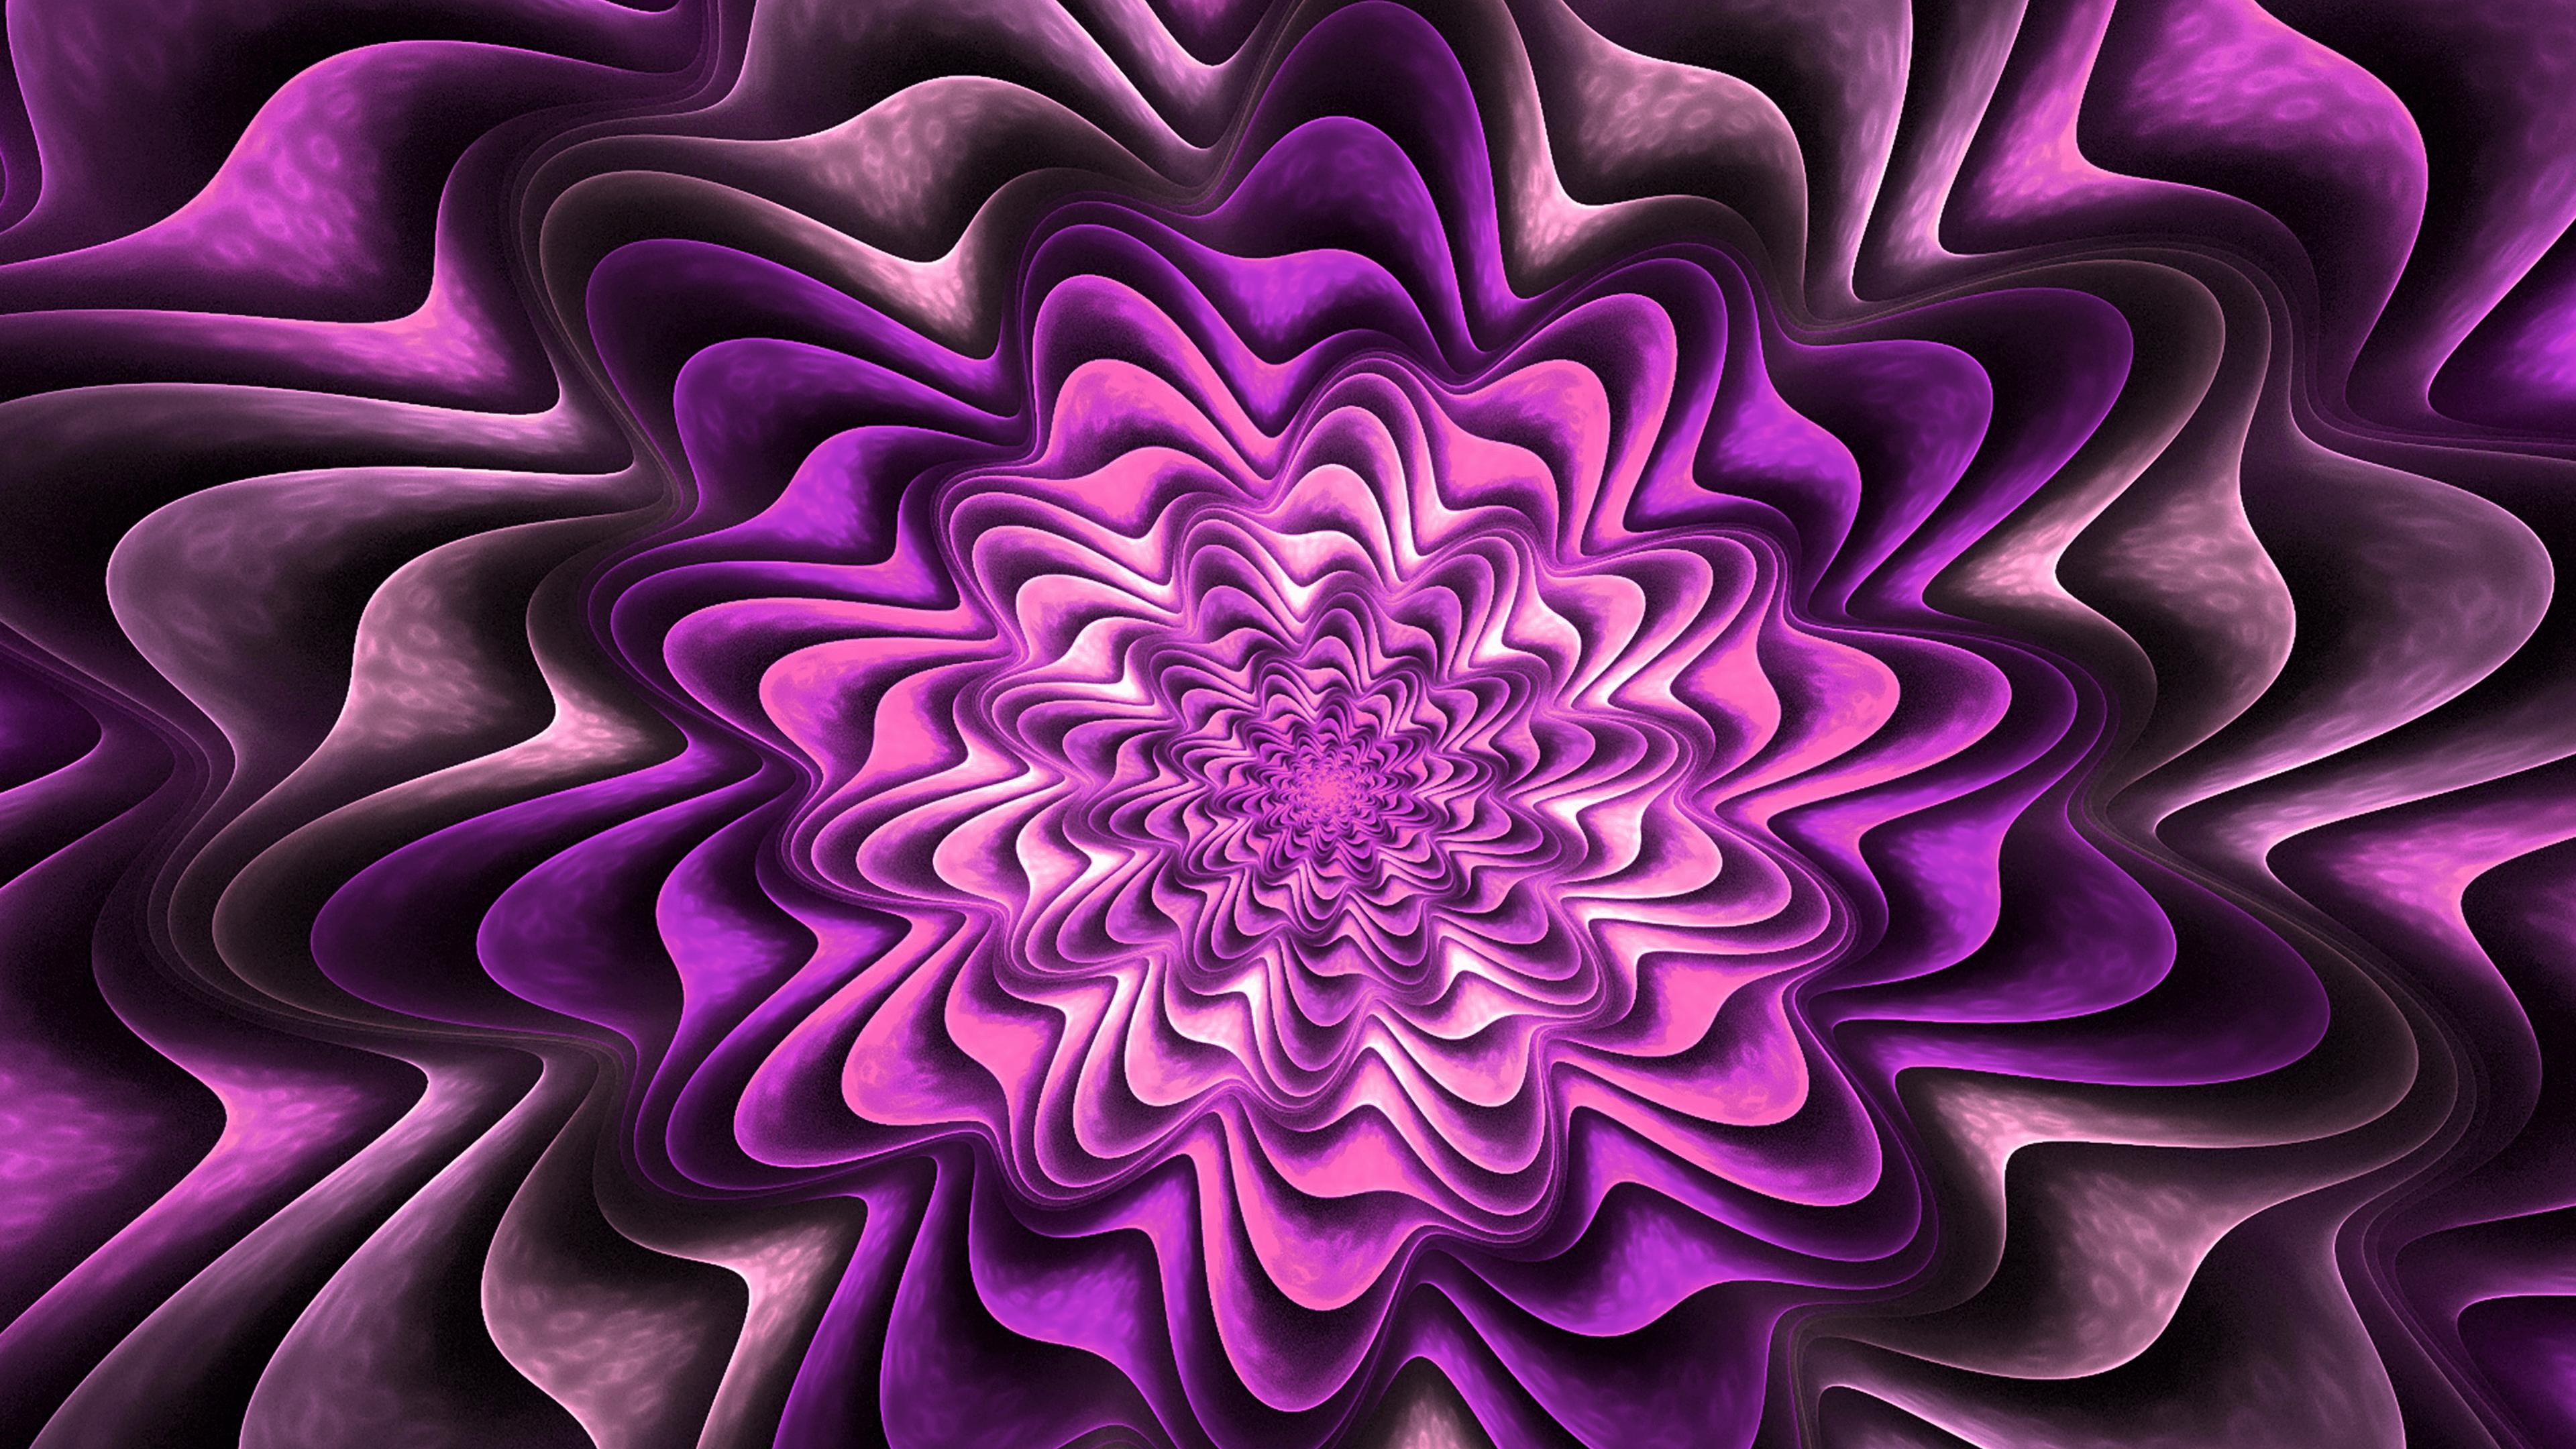 10 Outstanding purple desktop wallpaper 4k You Can Get It Free Of ...